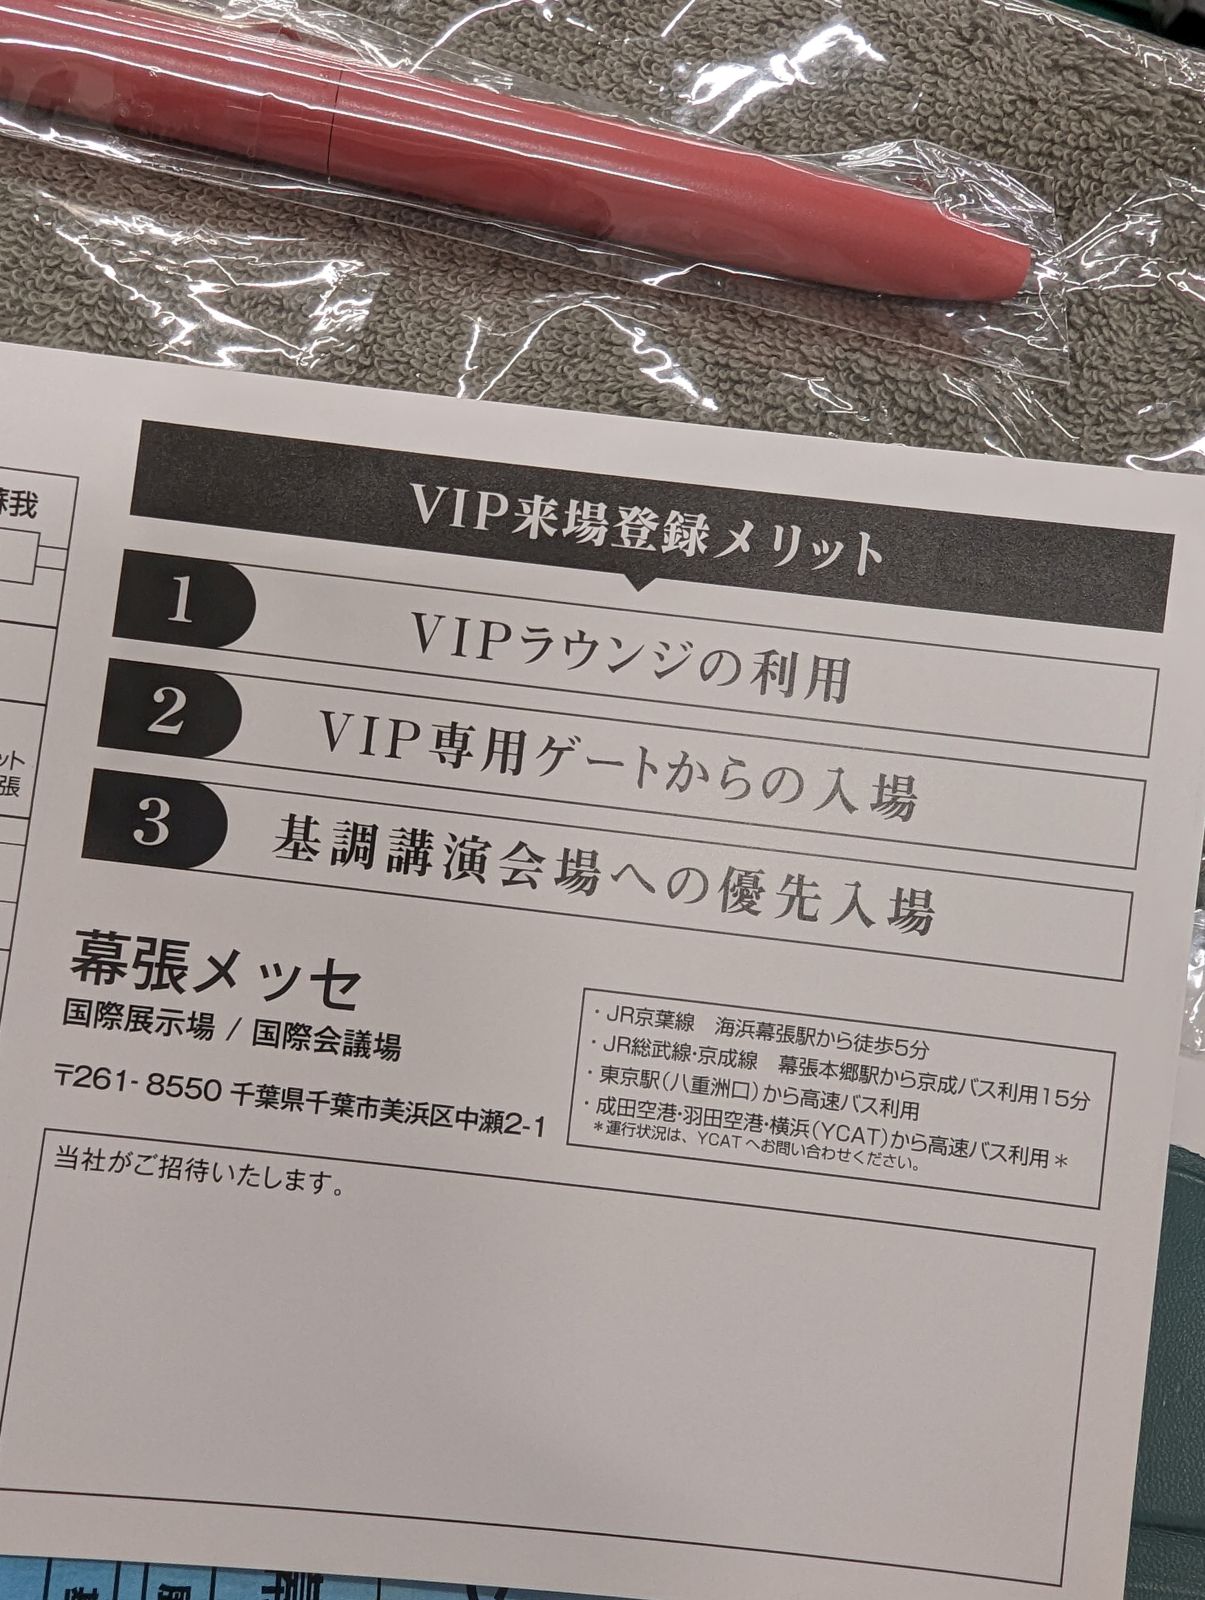 VIP来場登録のメリット